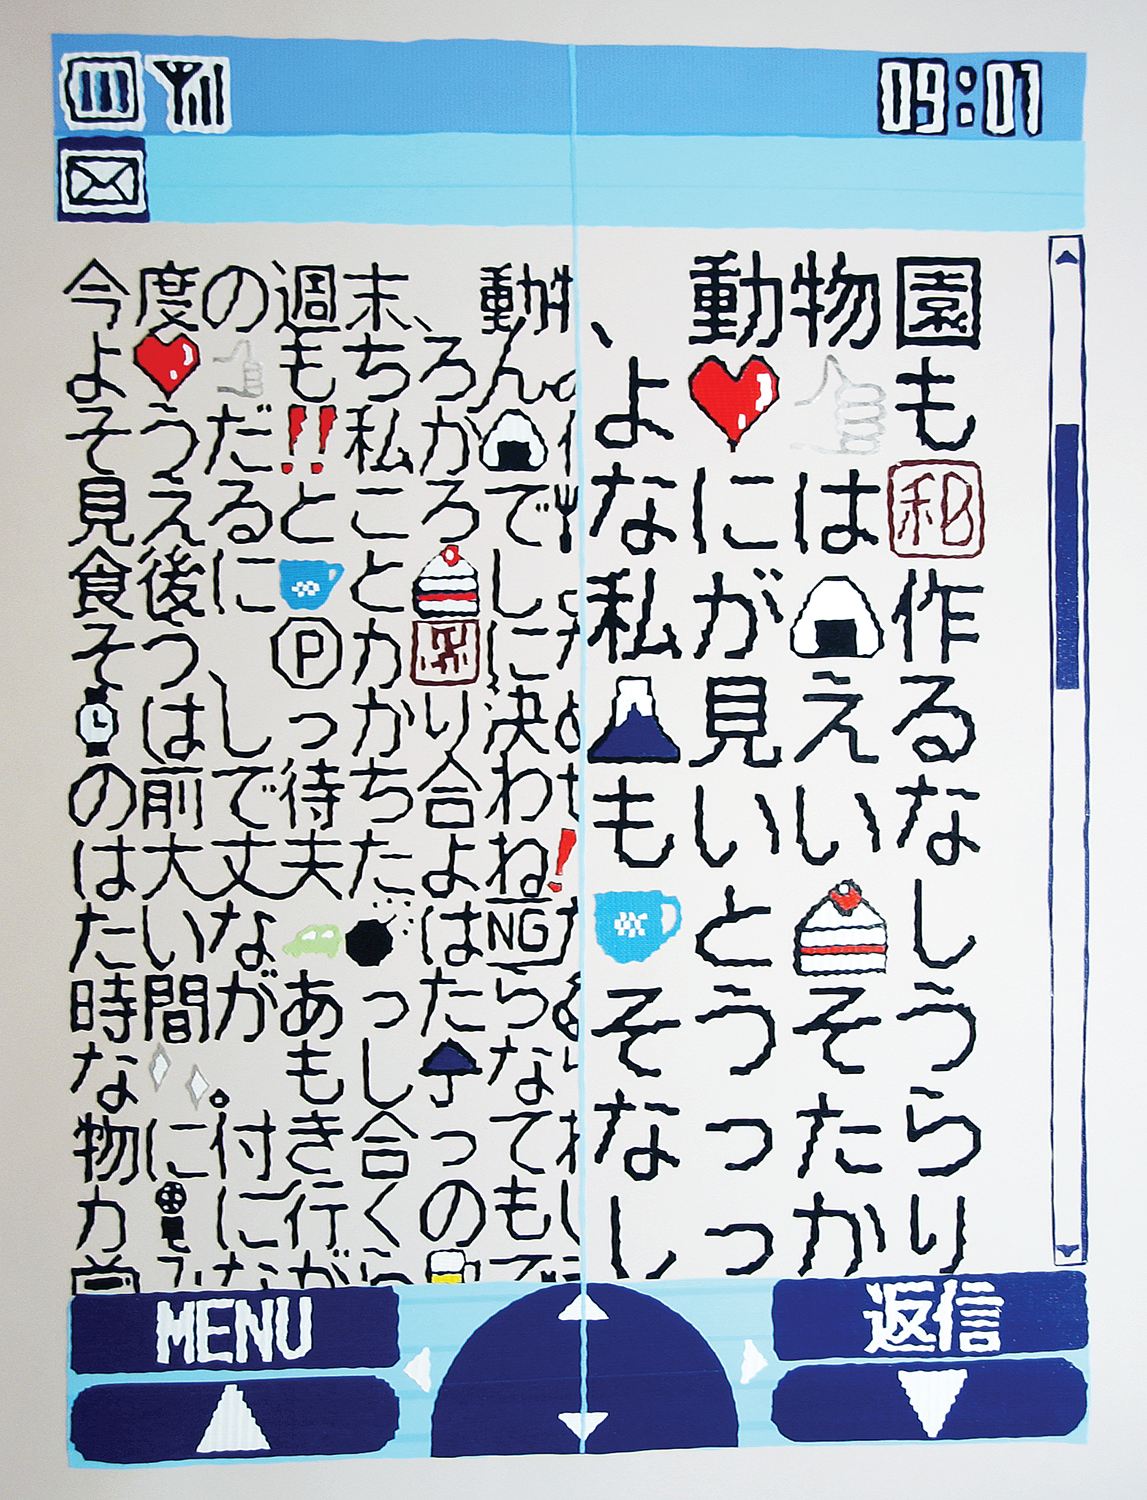 If You, a Japanese cellphone novel, as seen on a Nokia